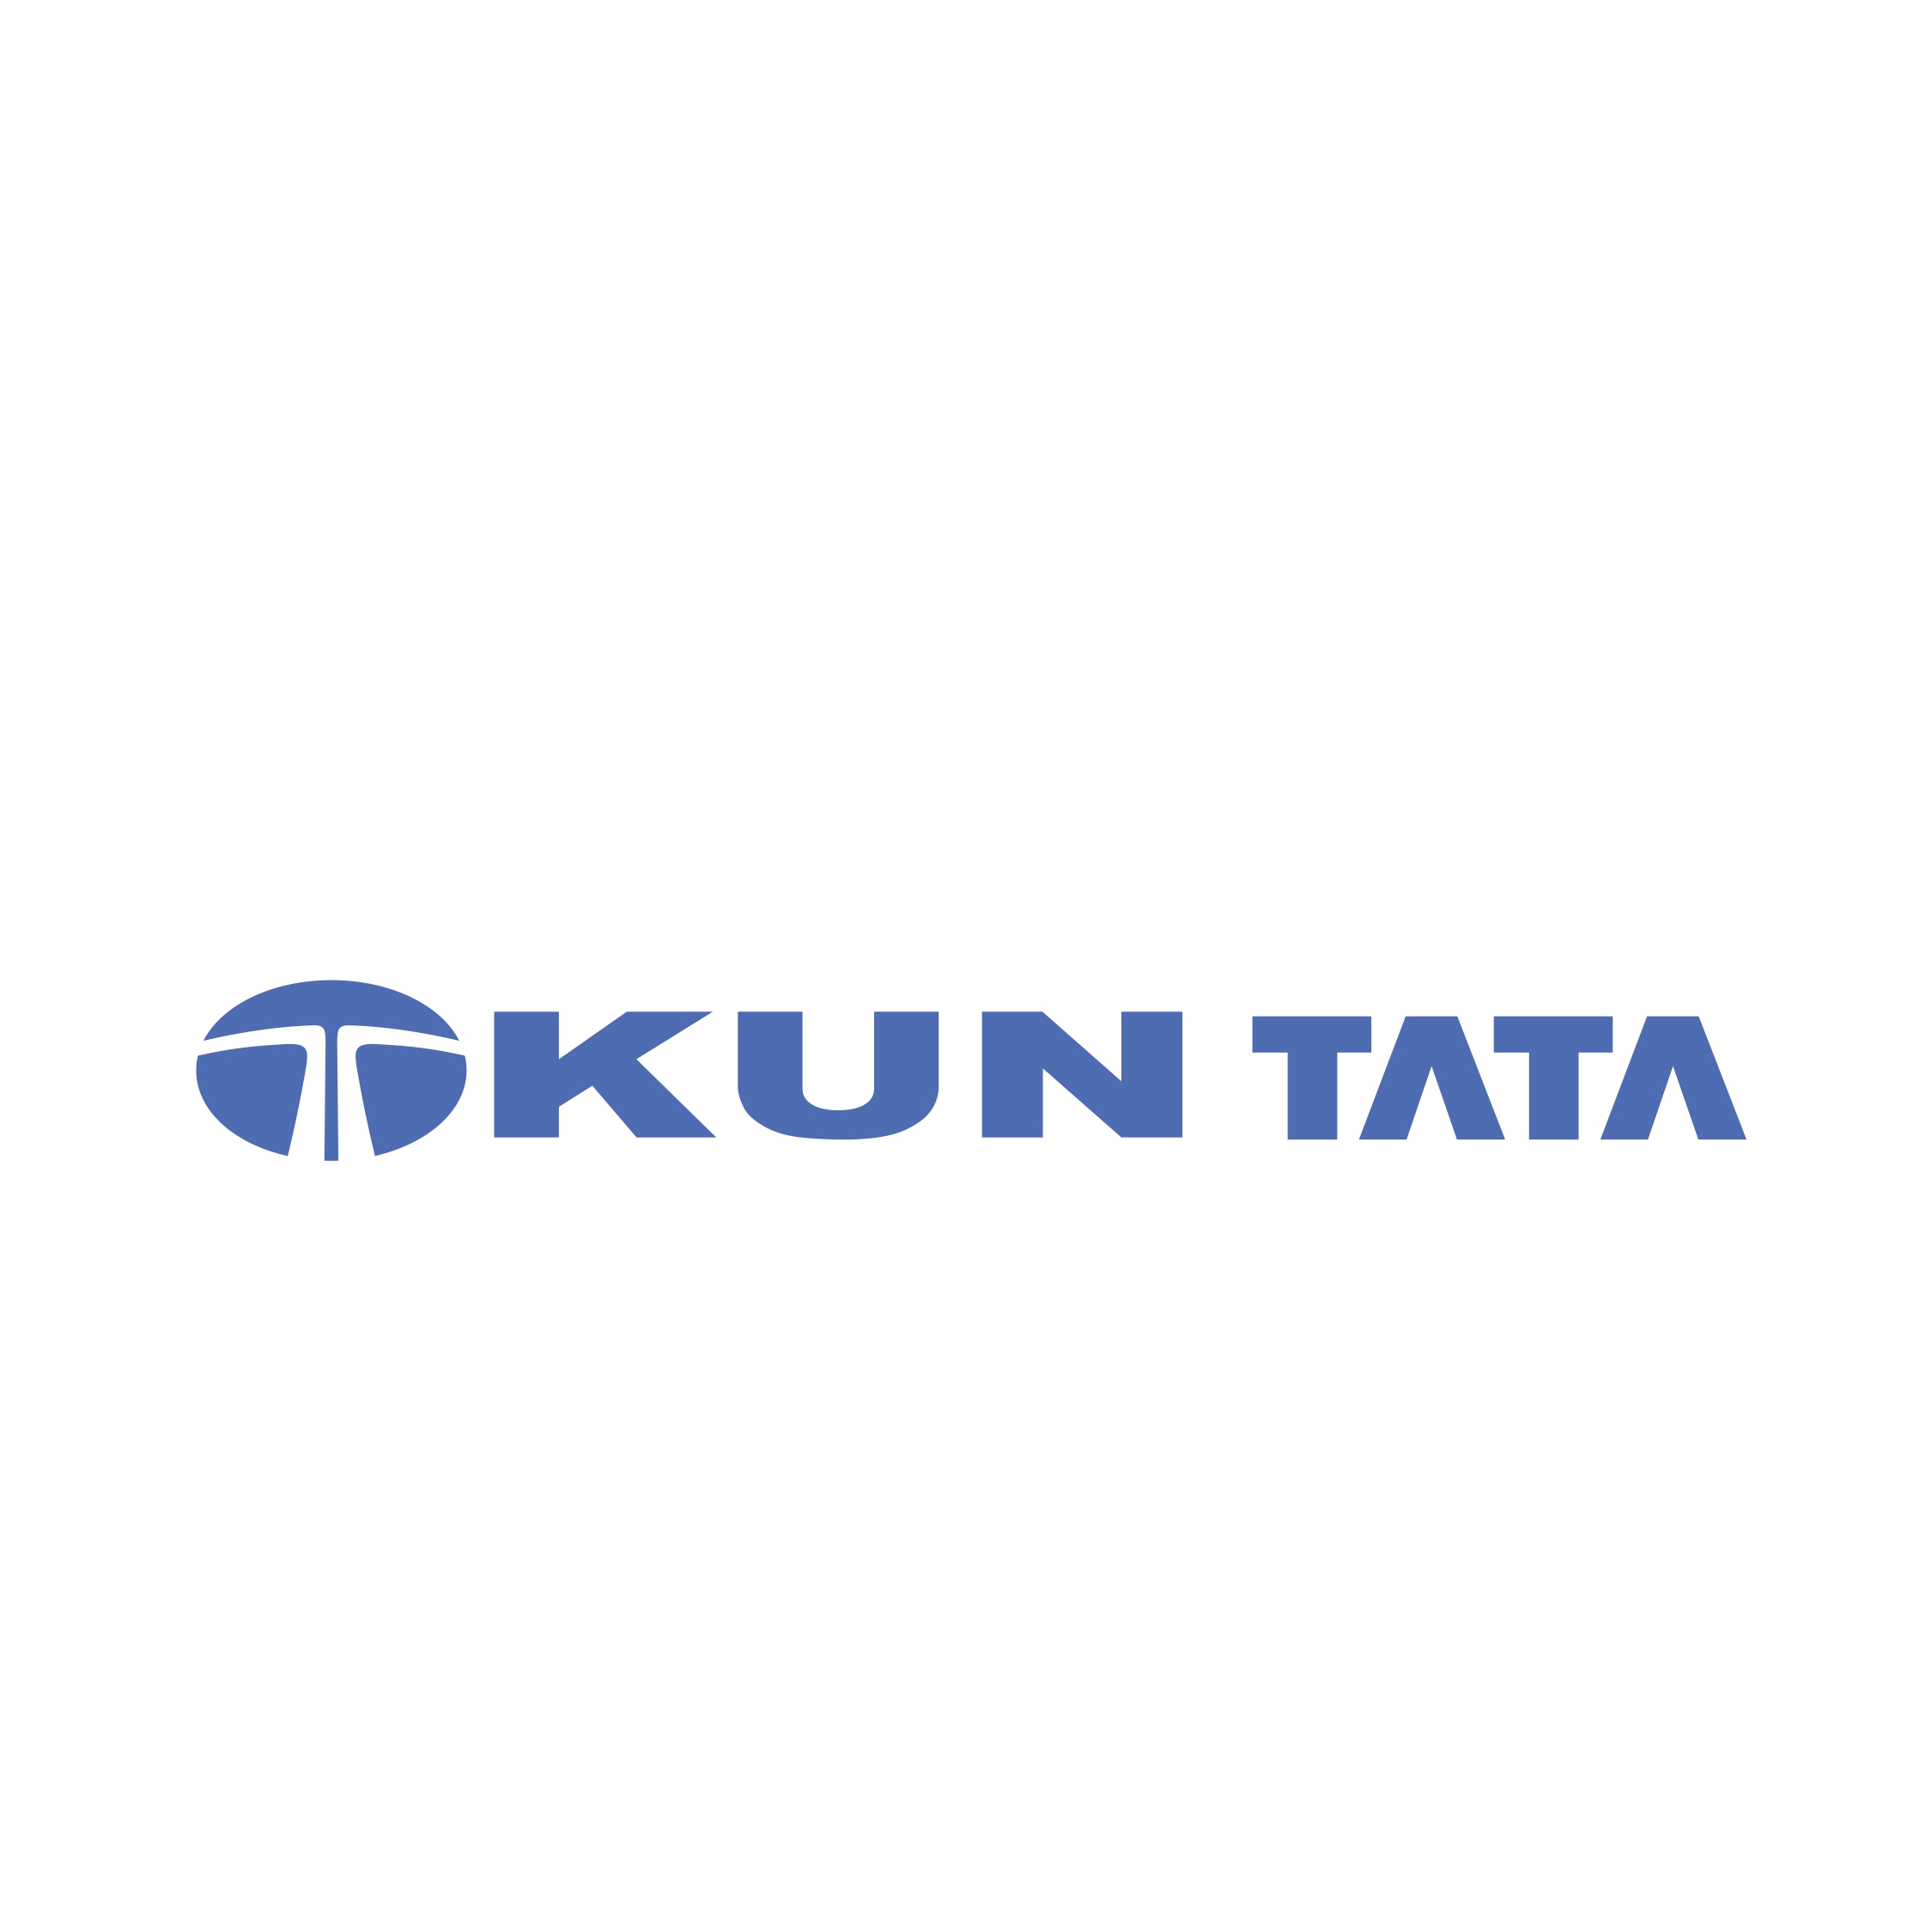 Tata Motors Logo Wallpapers - Wallpaper Cave